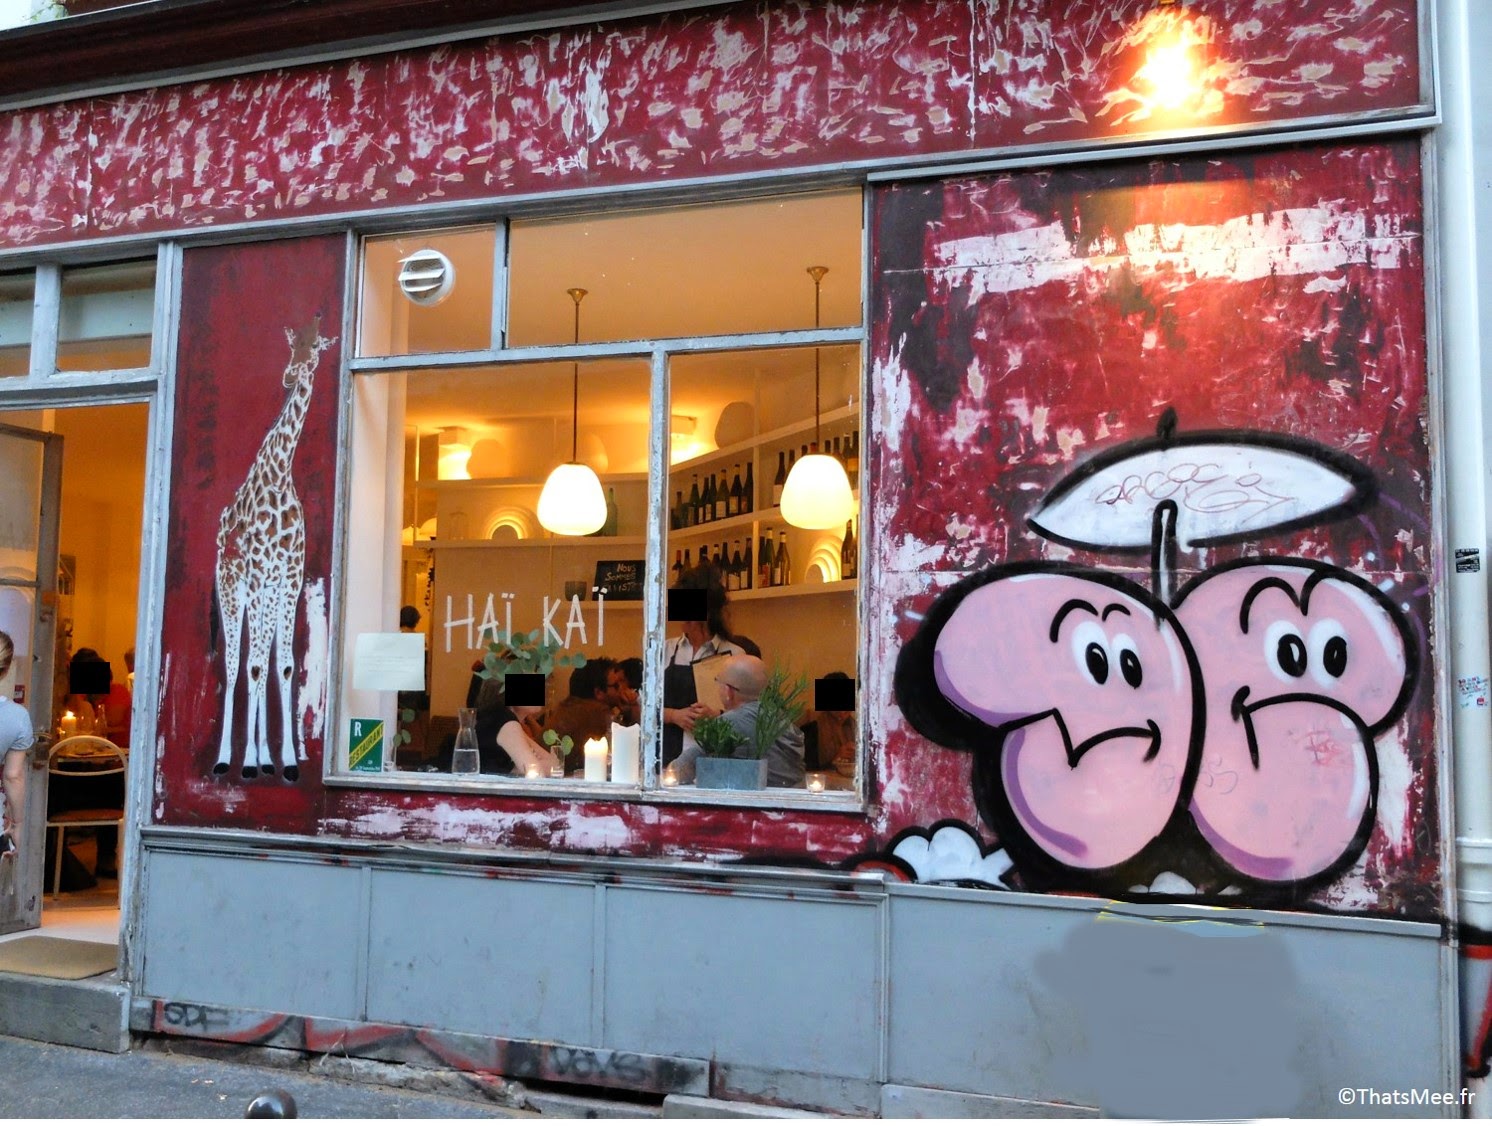 Déco fresque mur tag graffiti girafe Restaurant Haï Kai Paris, menu food du marché caviste cave à vins bio resto Haï Kai quai de Jemmapes Paris 10ème canal Saint-Martin